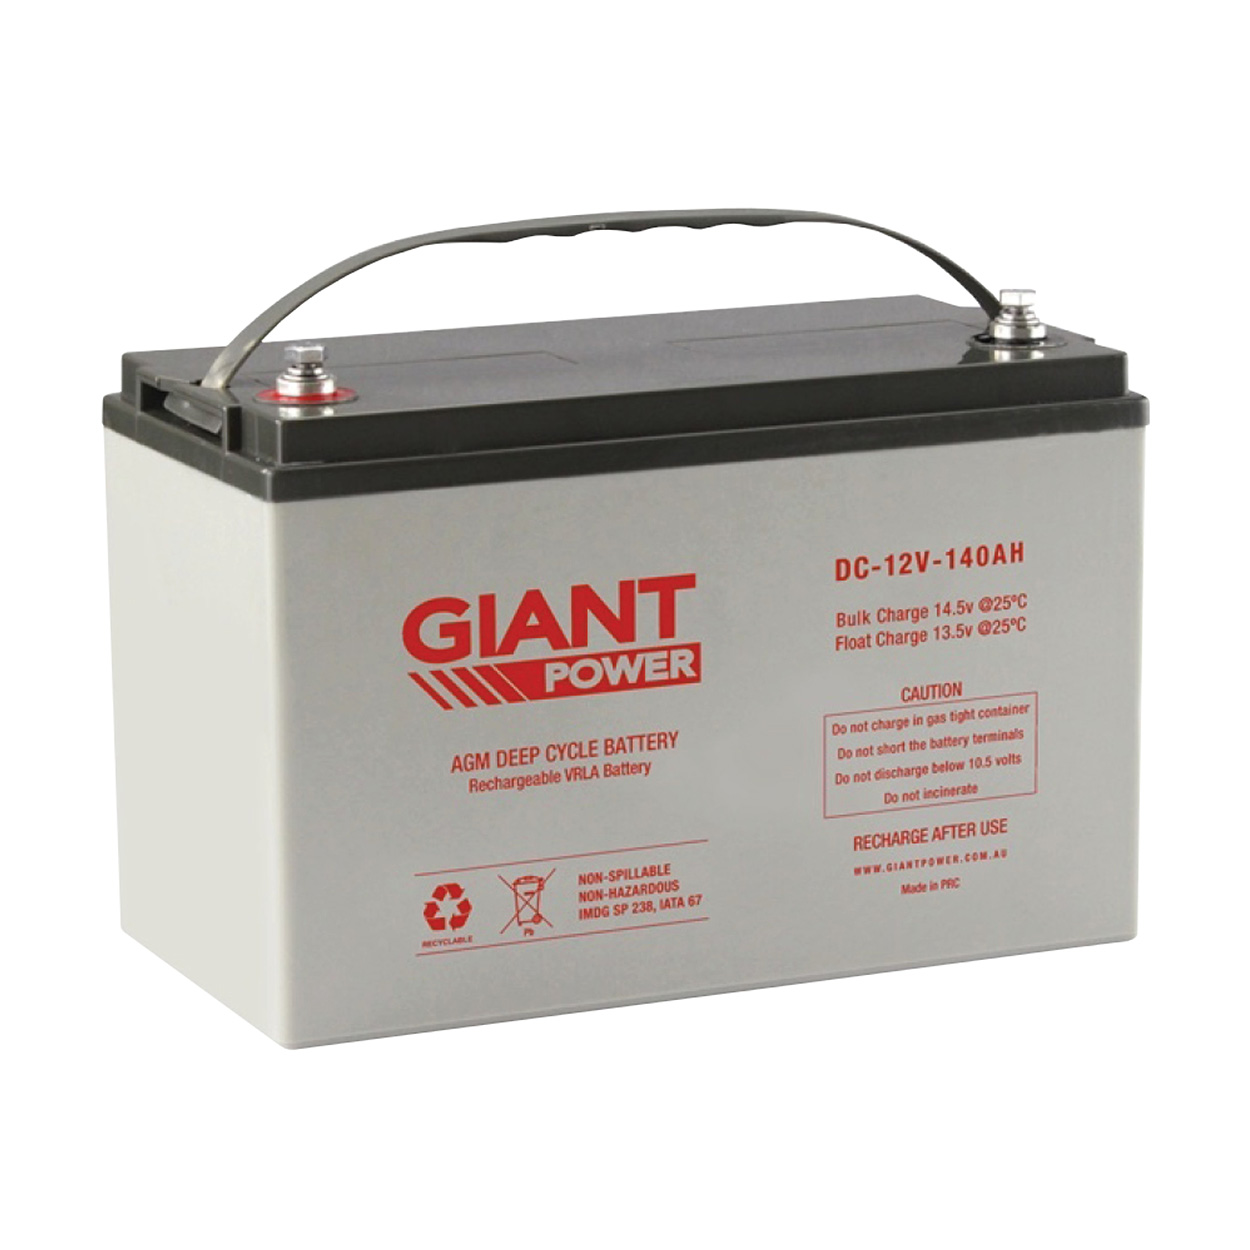 Giant Power 140Ah AGM Batteries